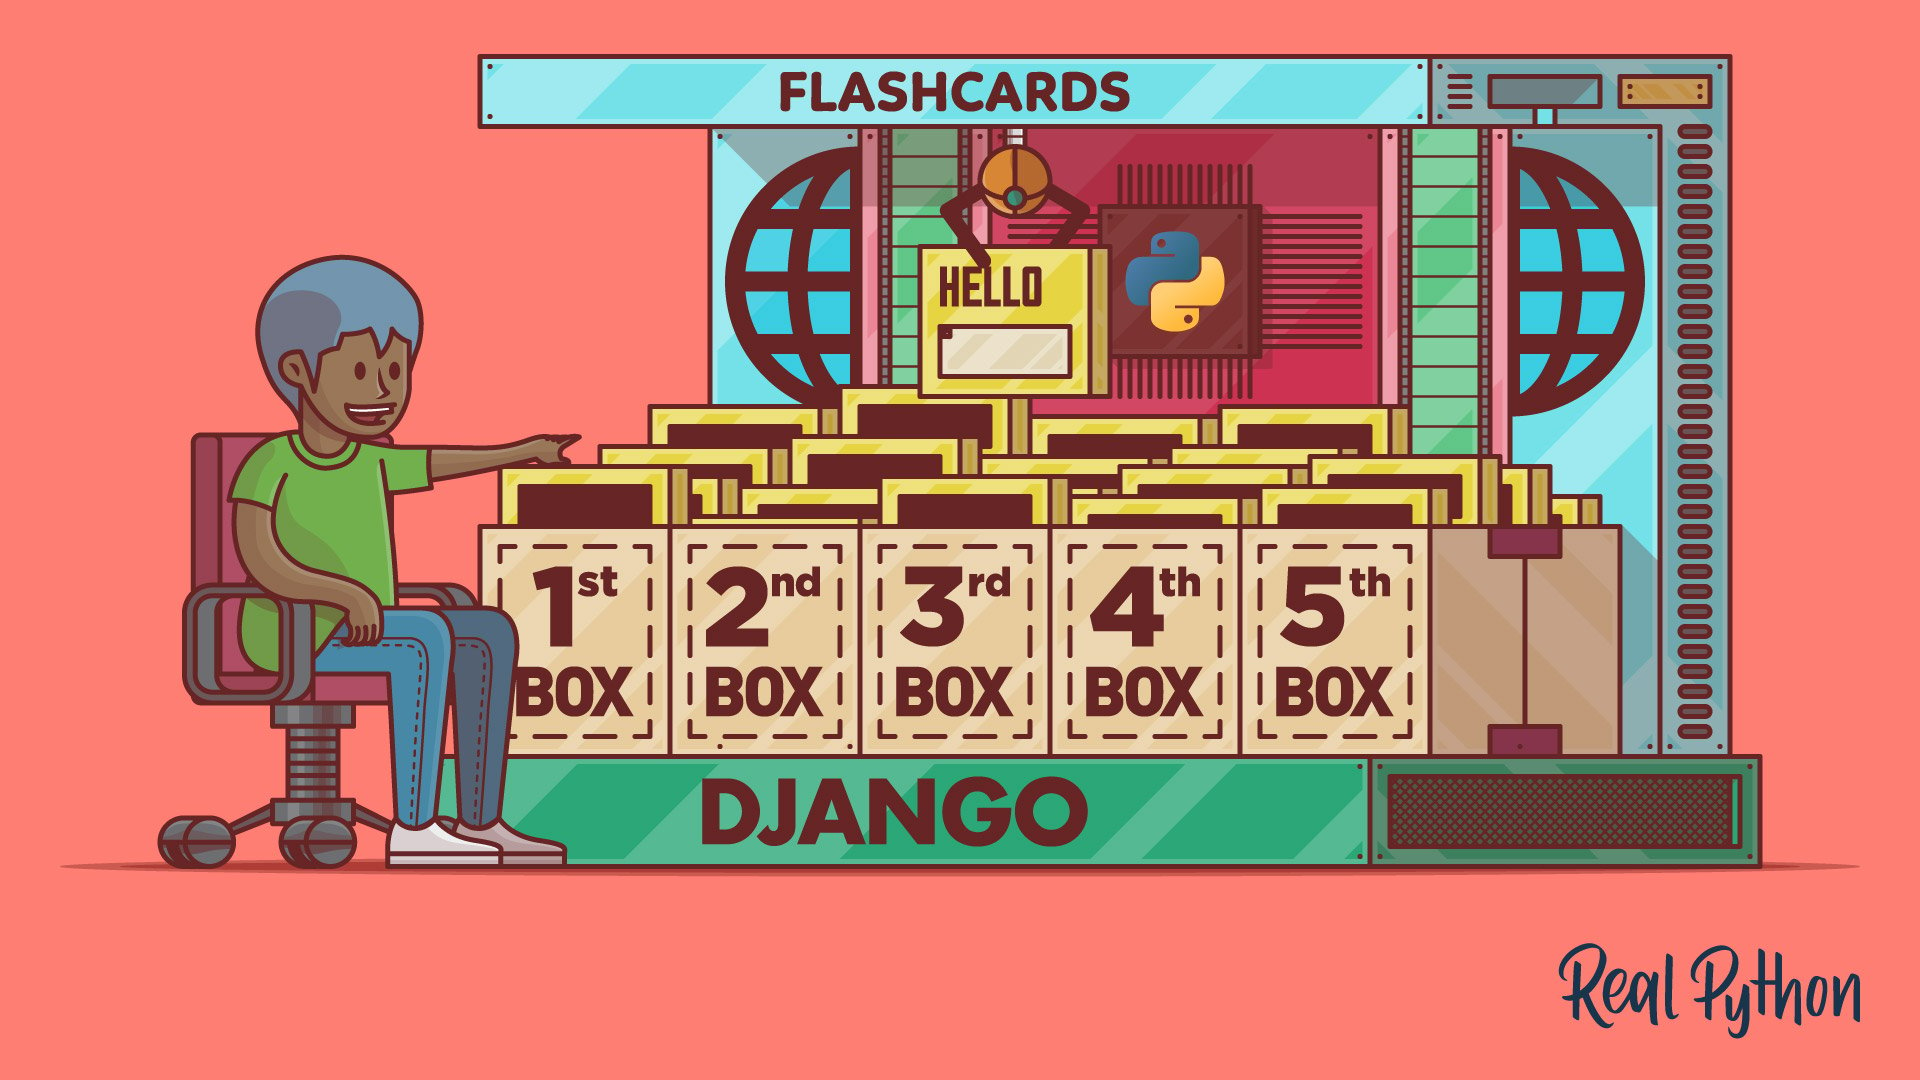 Build a Flashcards App With Django